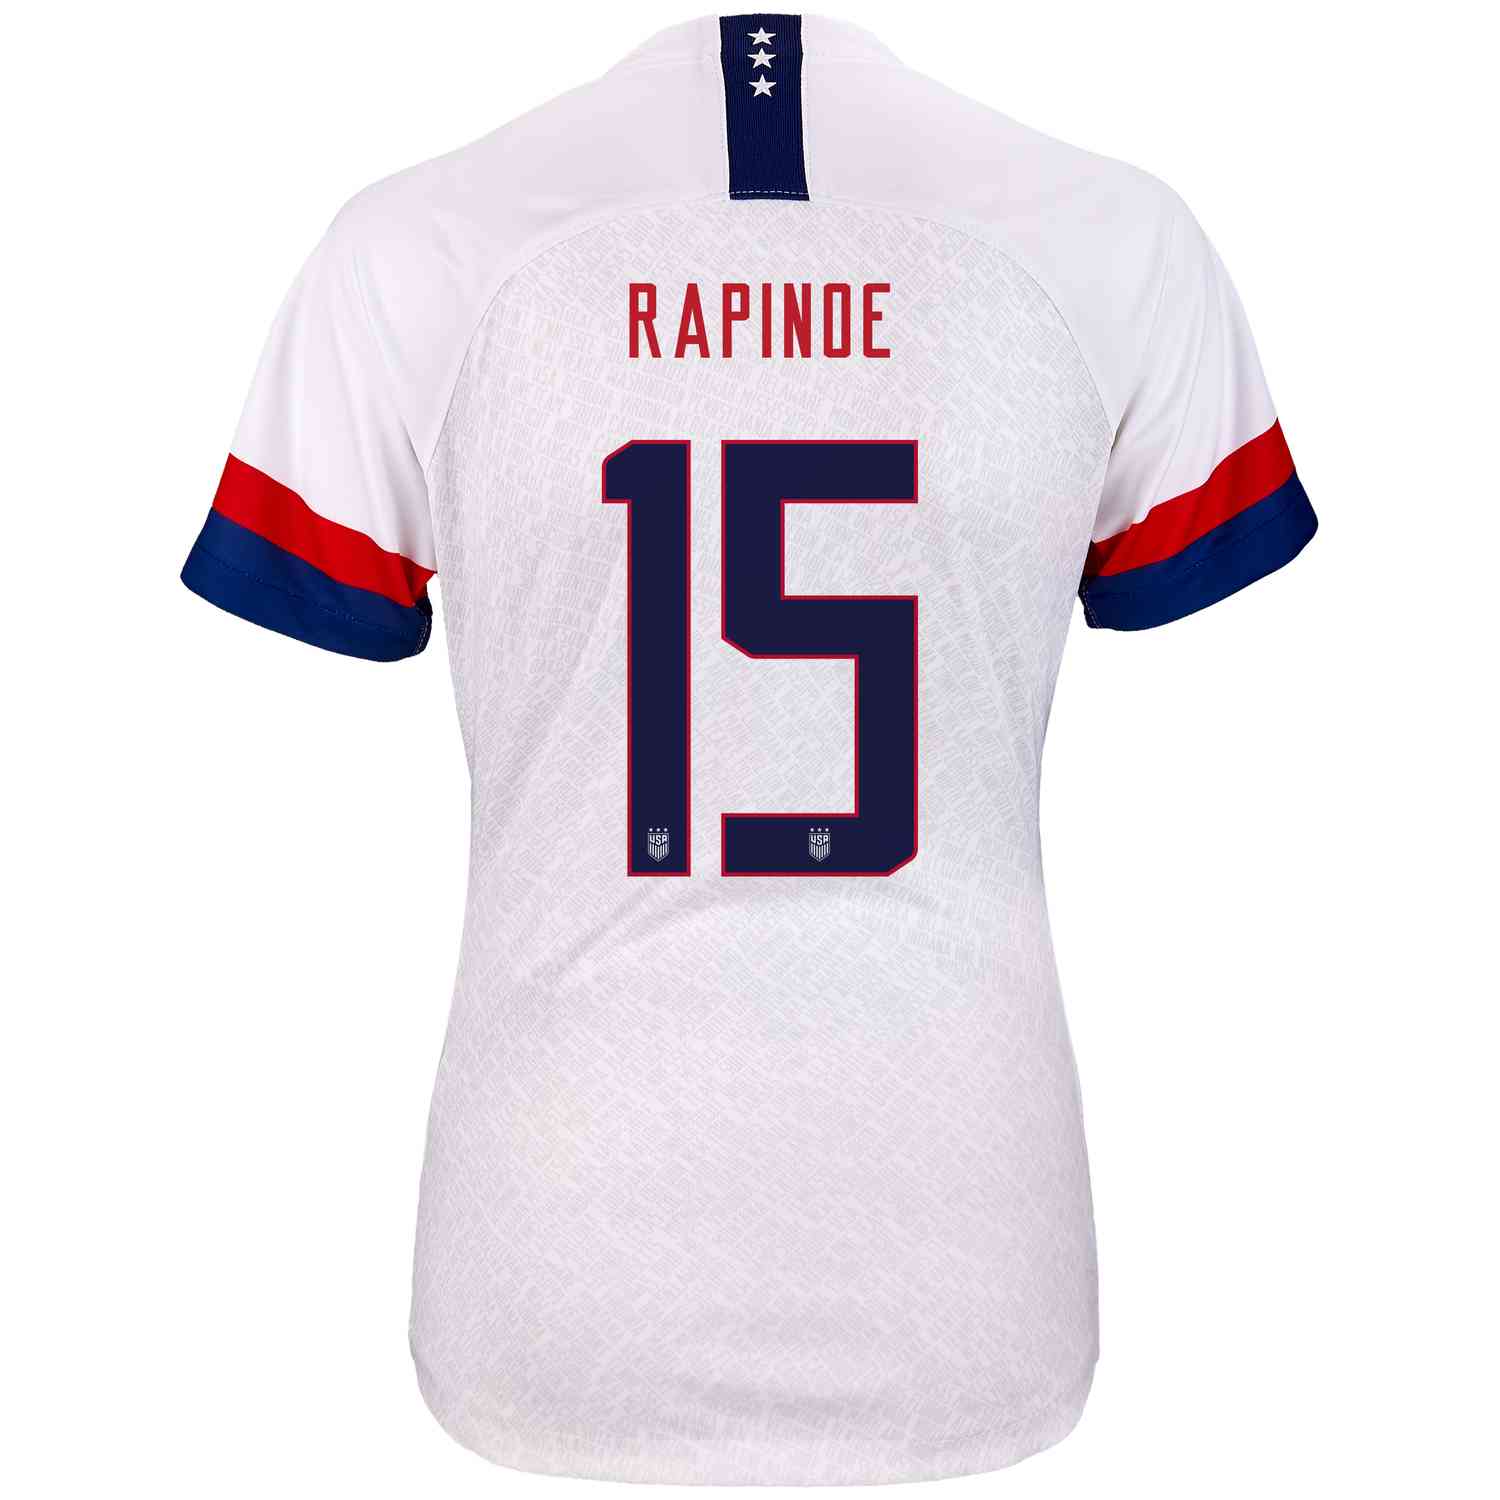 rapinoe away jersey